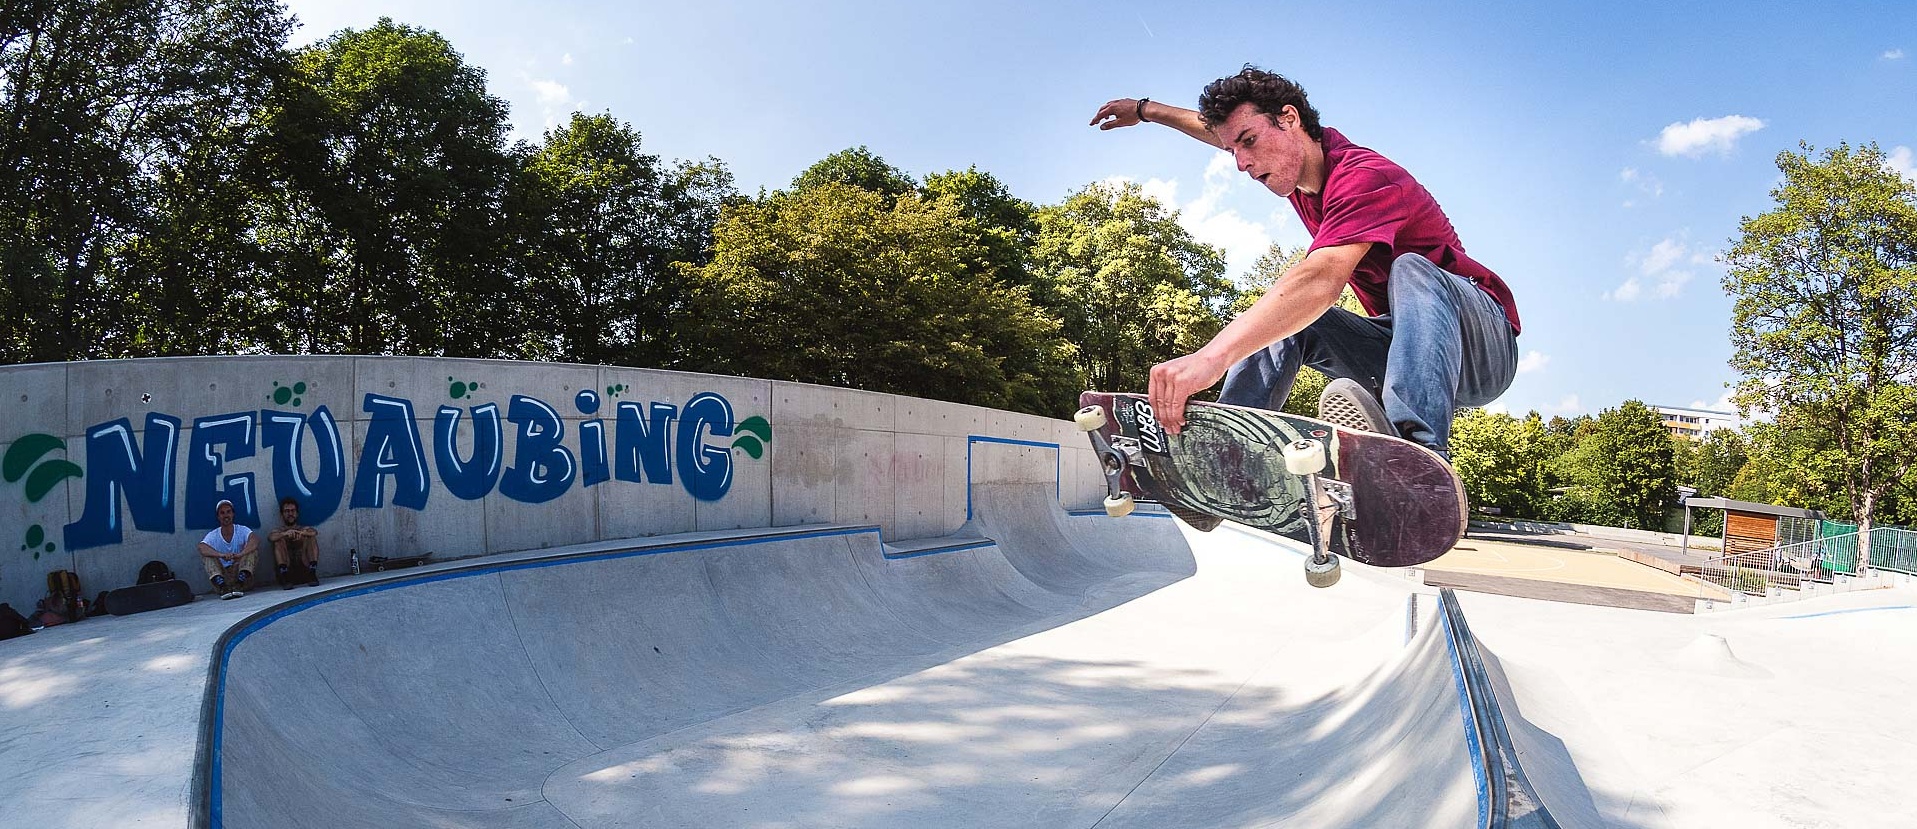 Skateboarder mit rotem T-Shirt macht Trick in Skatepark